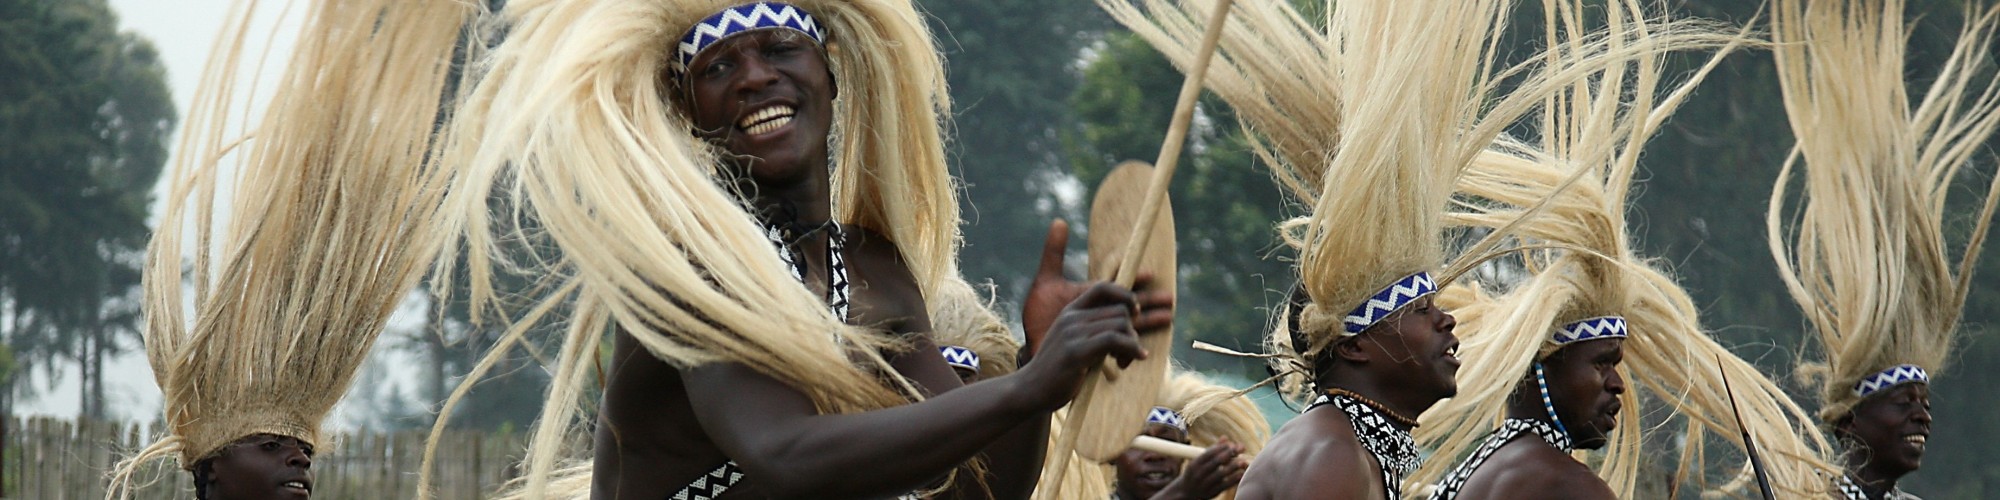 Virunga dancers 1